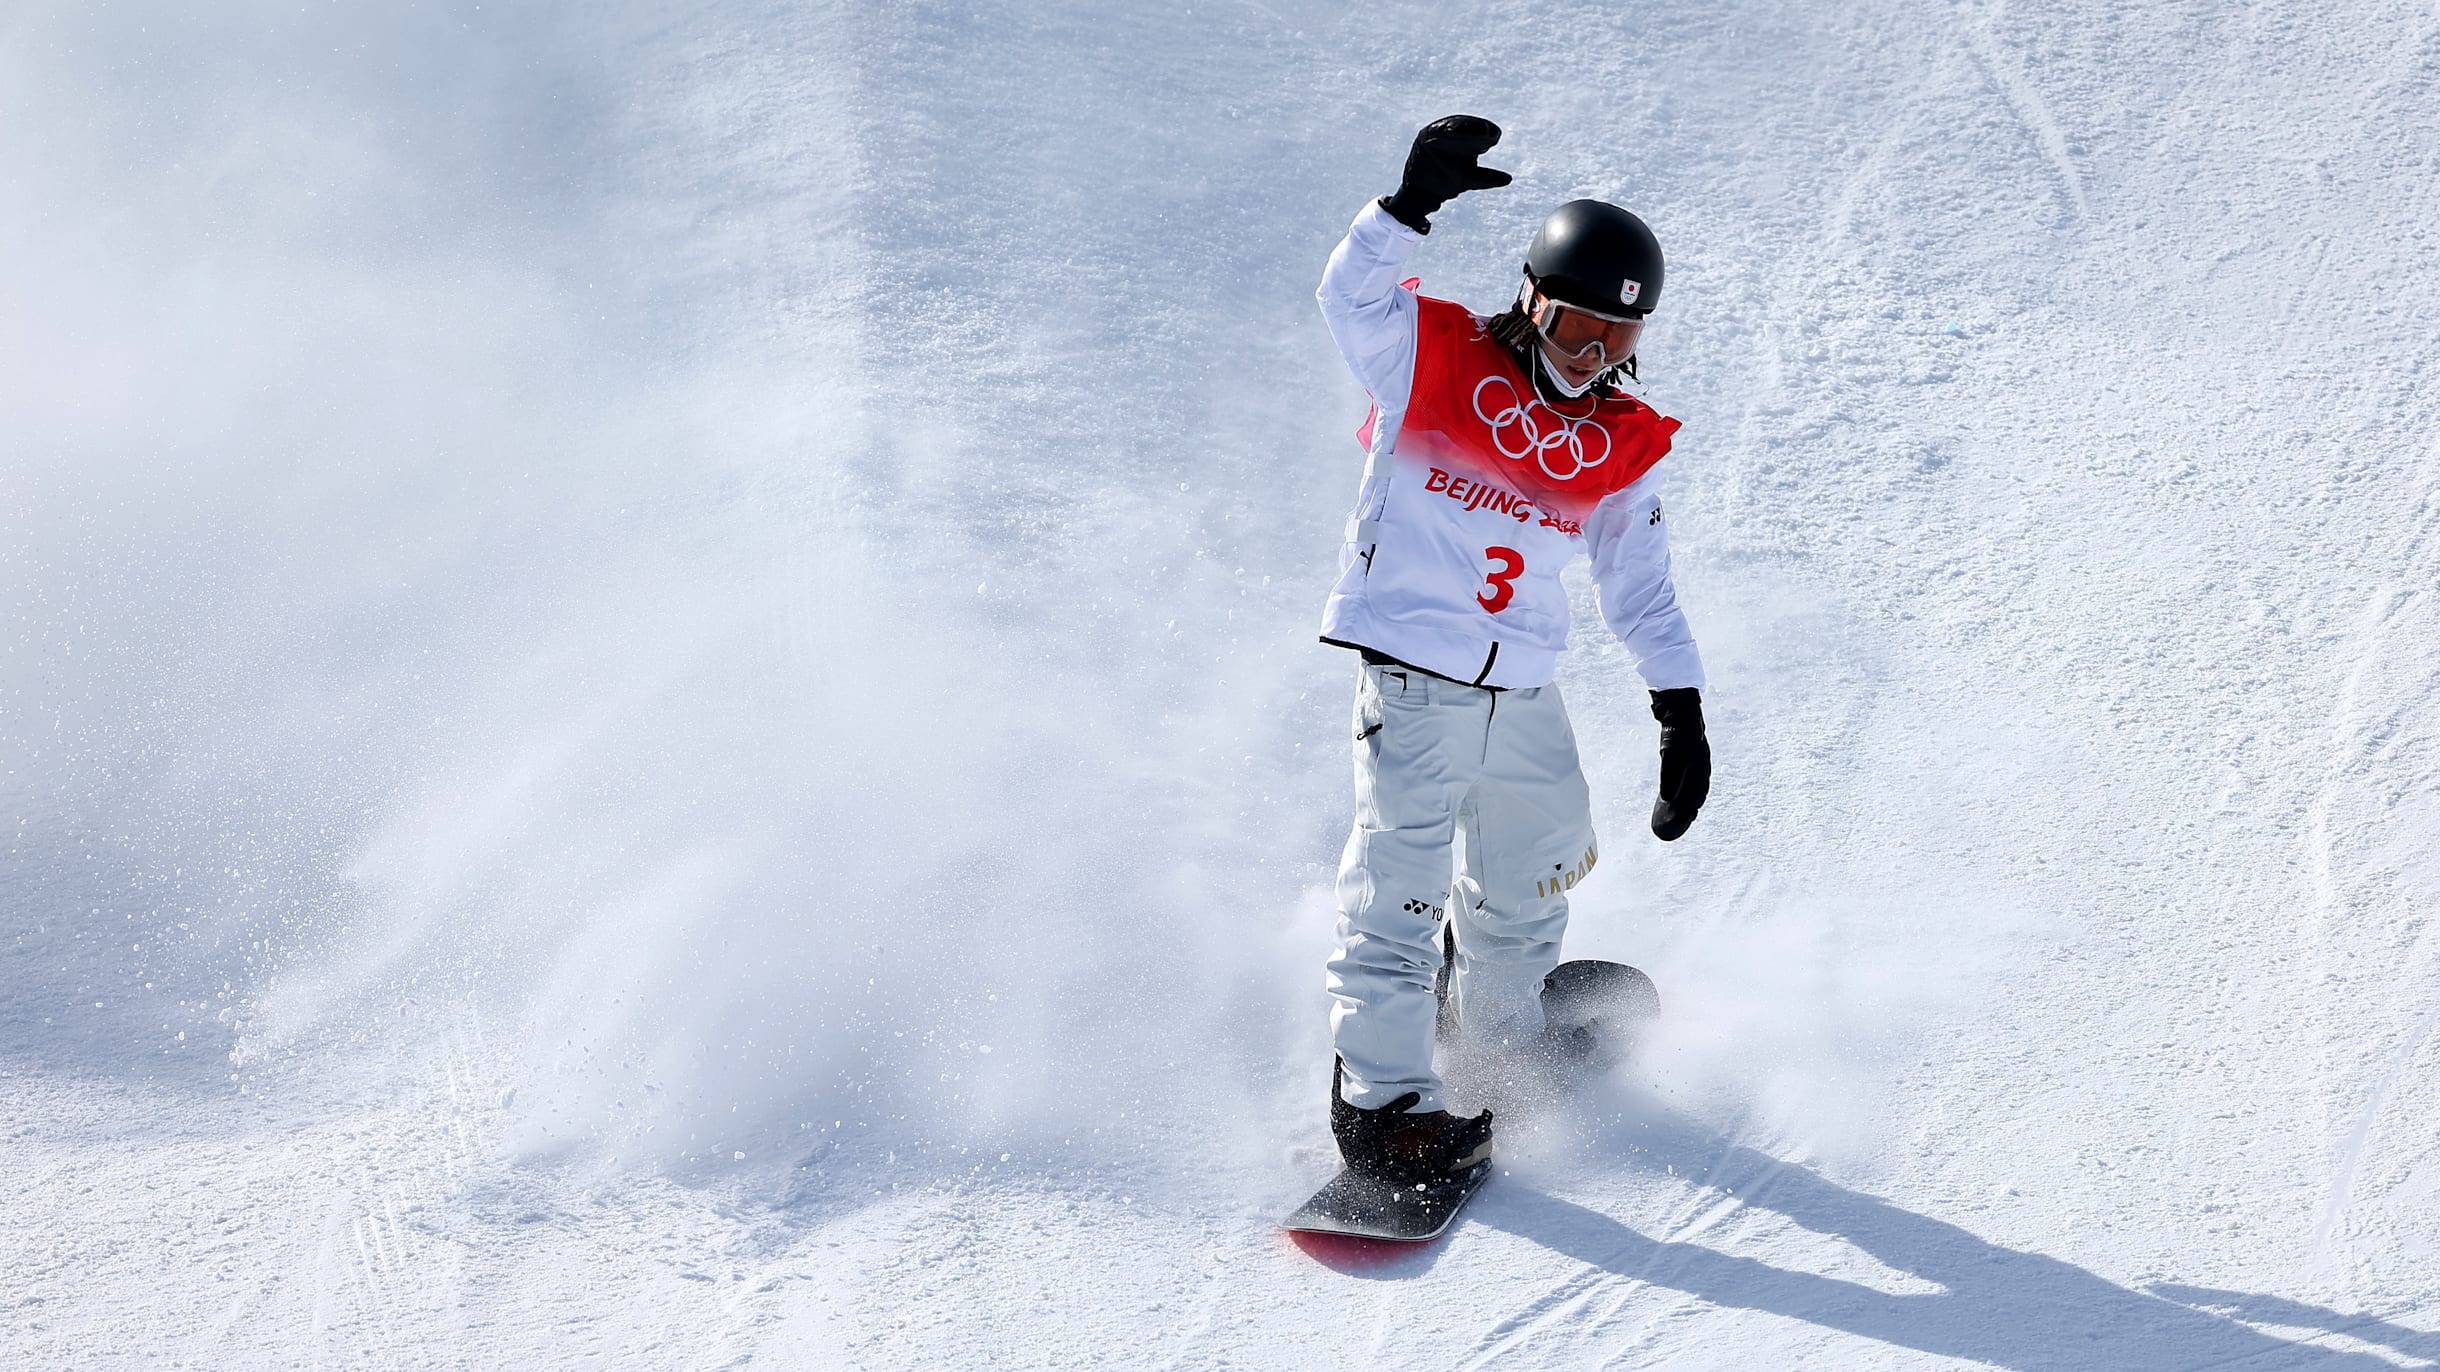 Snowboard star Hirano Ayumu I want to accomplish more than Shaun White